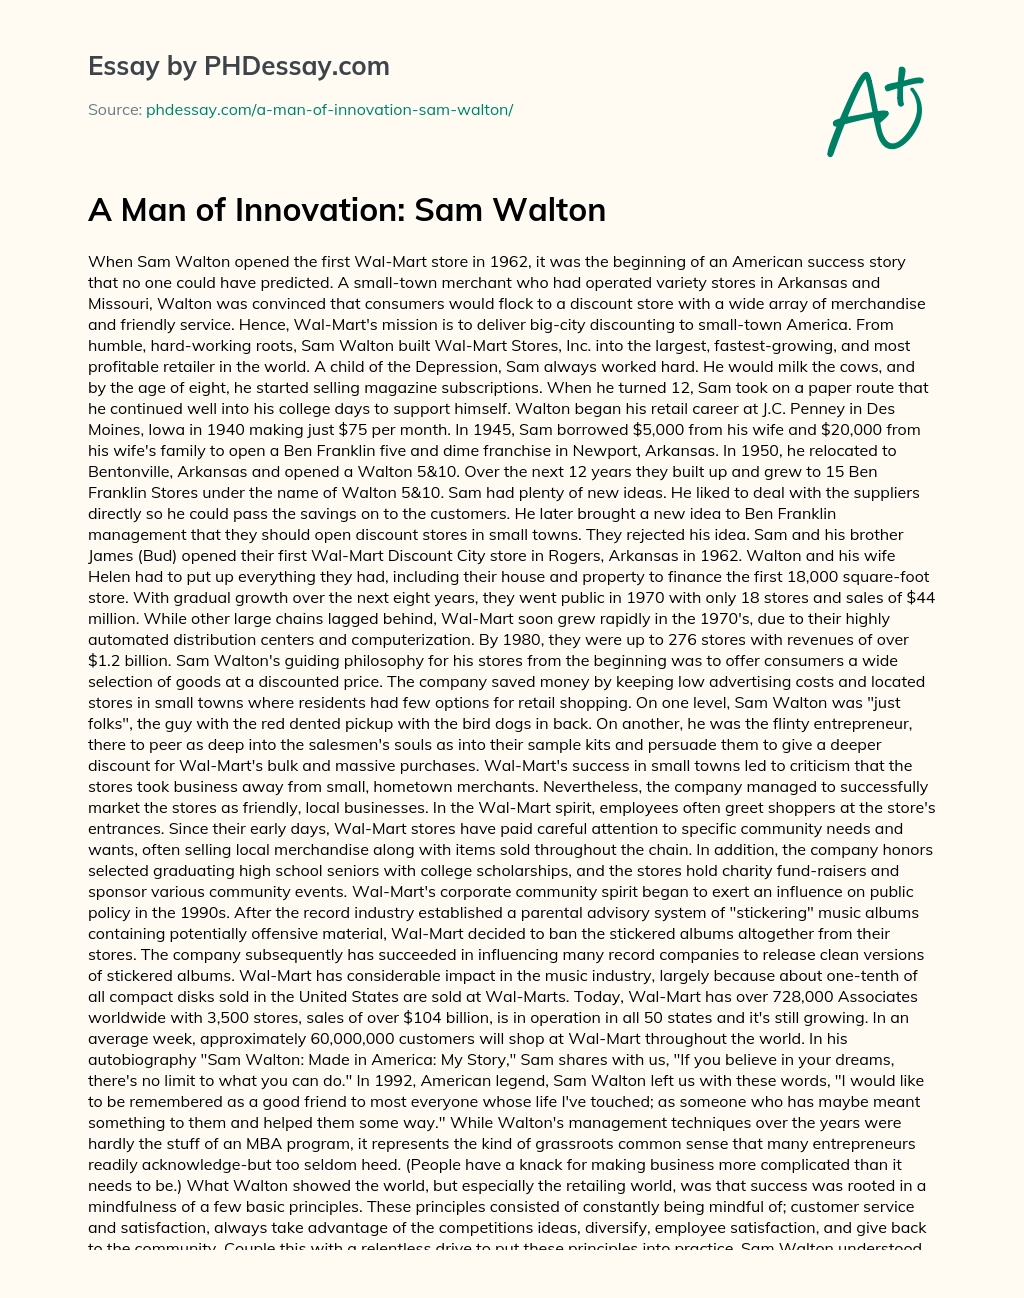 A Man of Innovation: Sam Walton essay